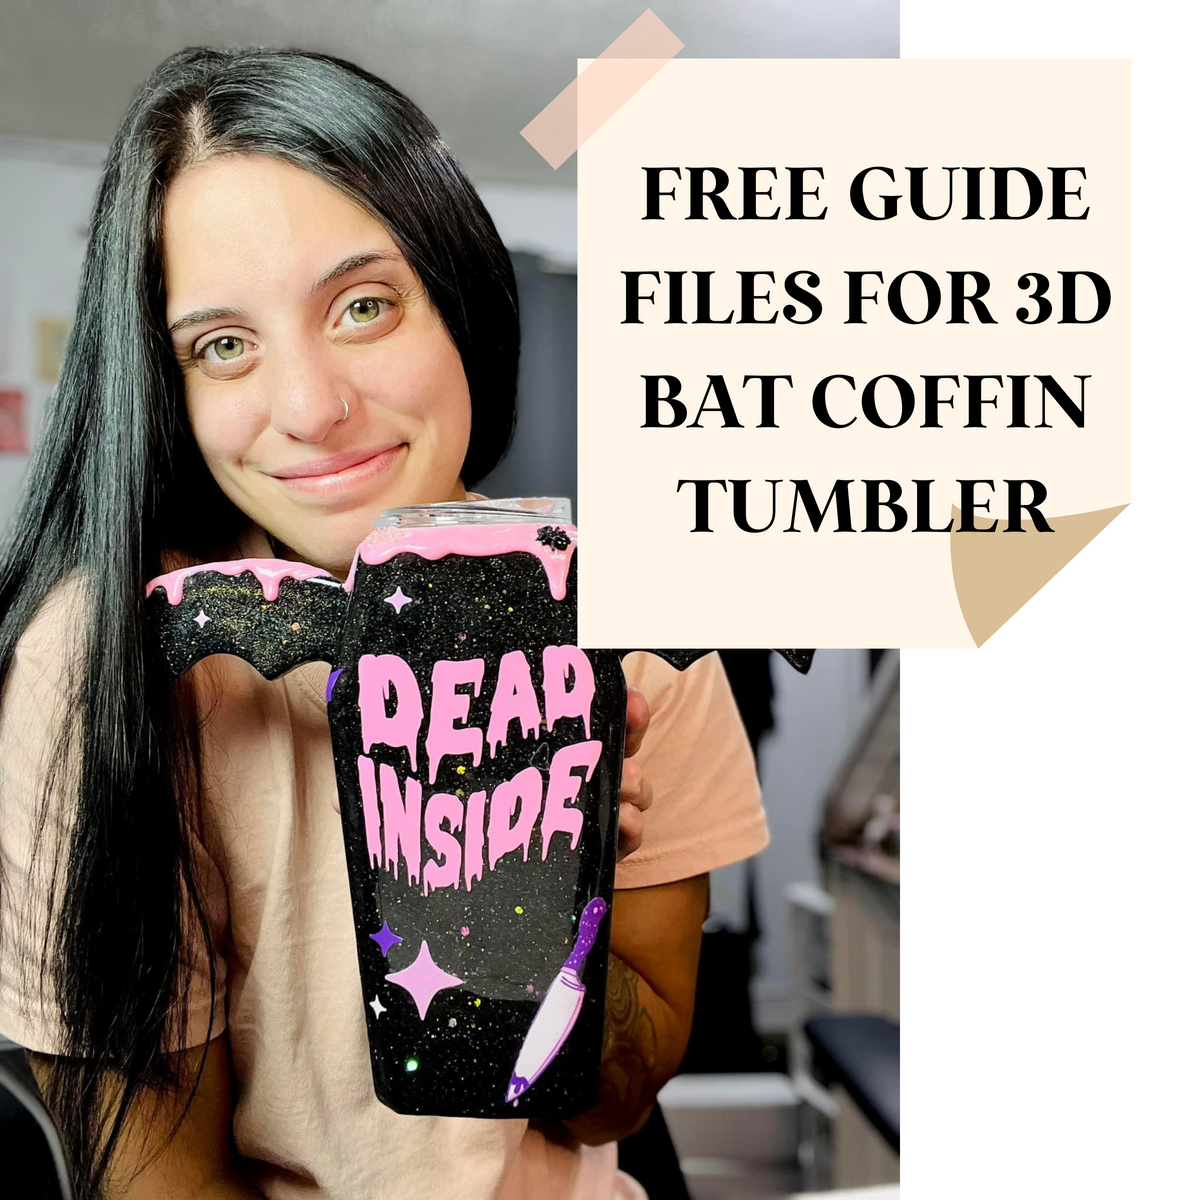 Bat coffin files : FREE